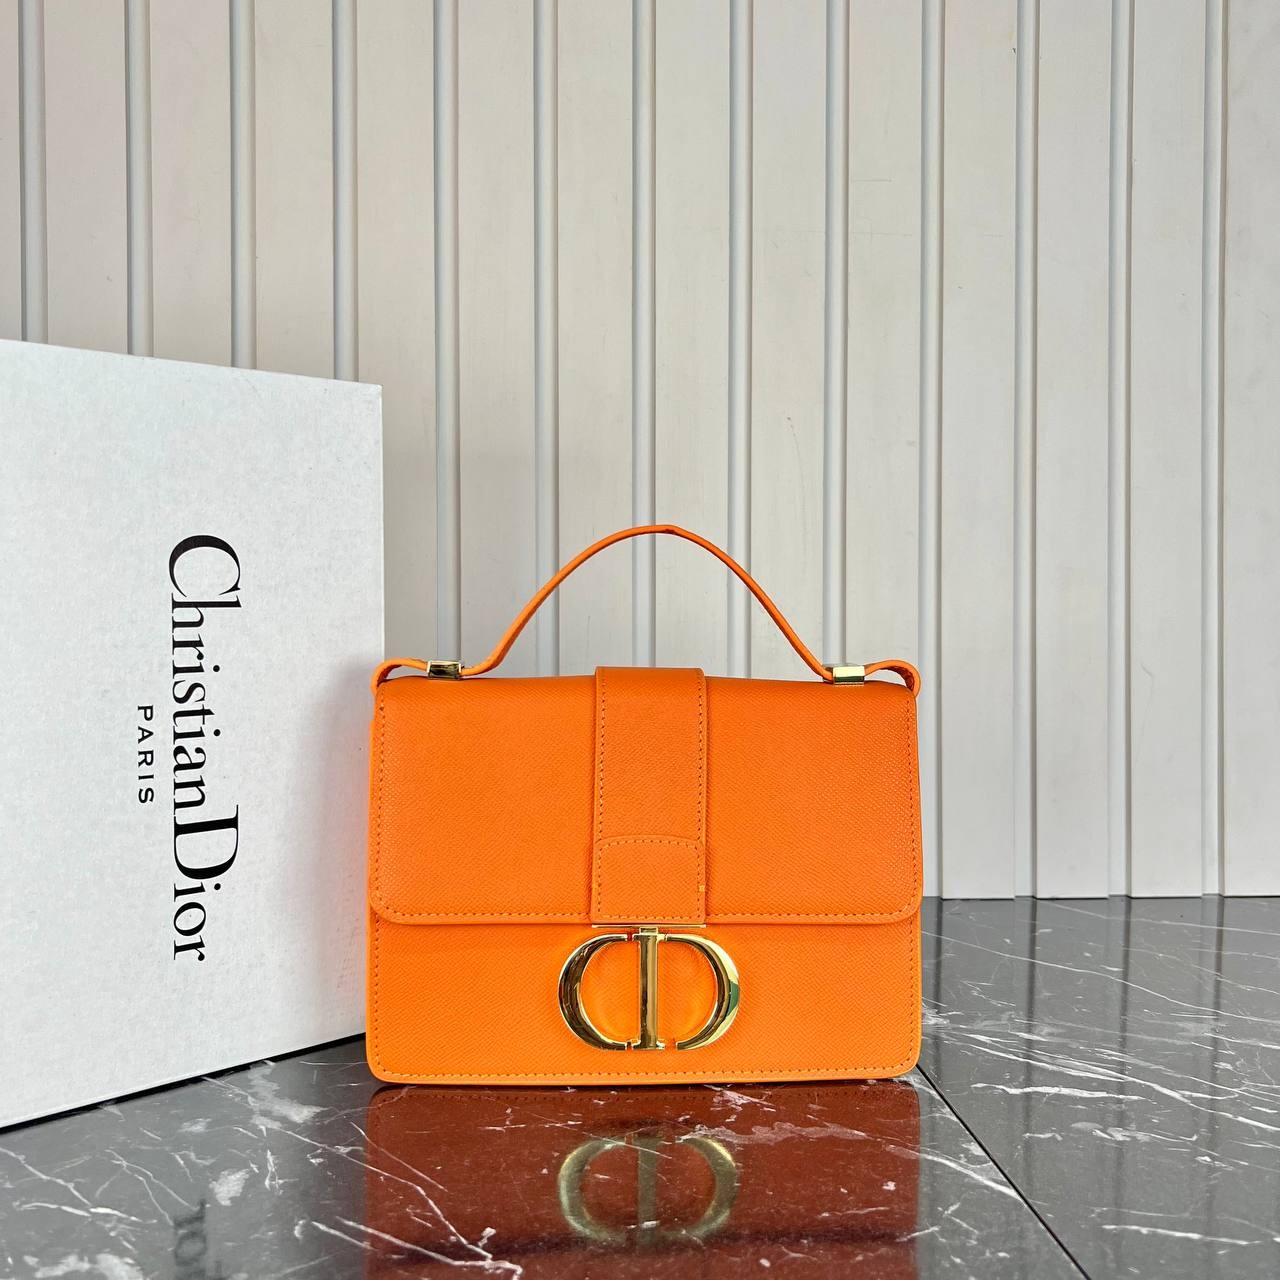 Christian Dior Montaigne Bag in Orange